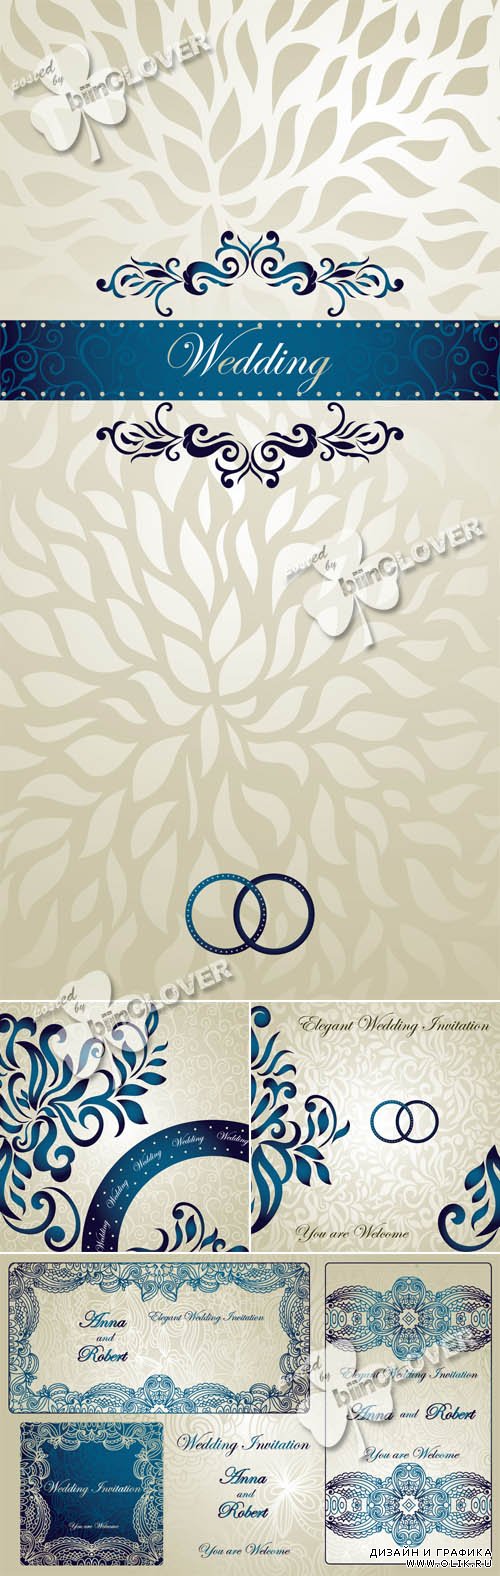 Wedding invitation with floral design 0423